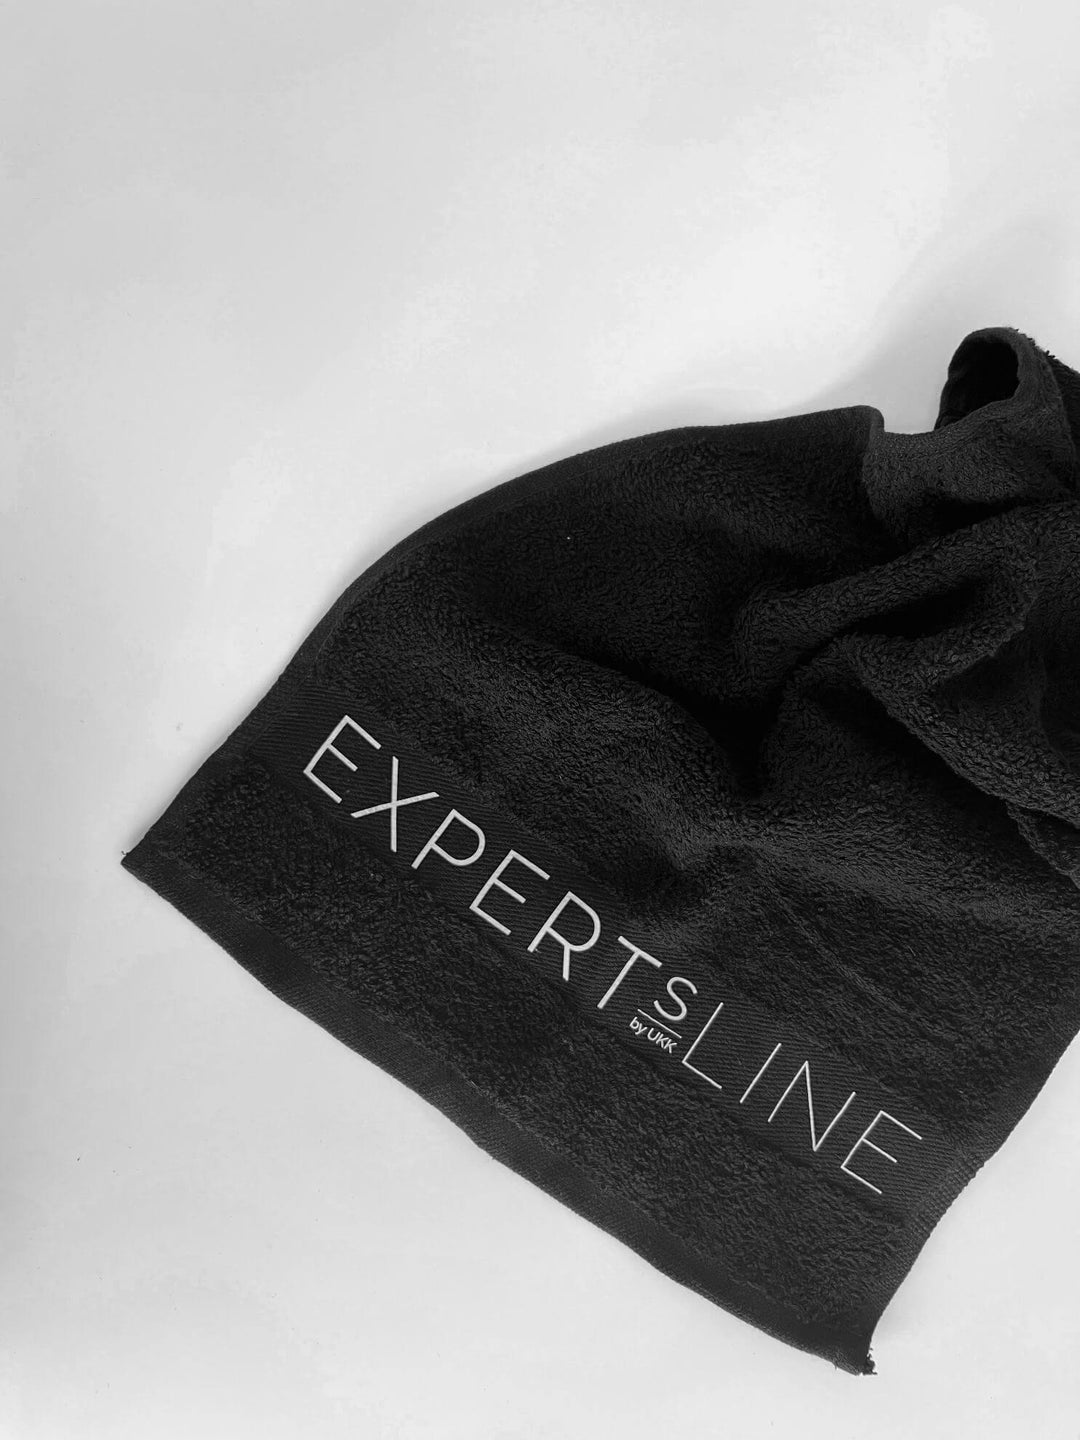 ExpertsLine guest towel